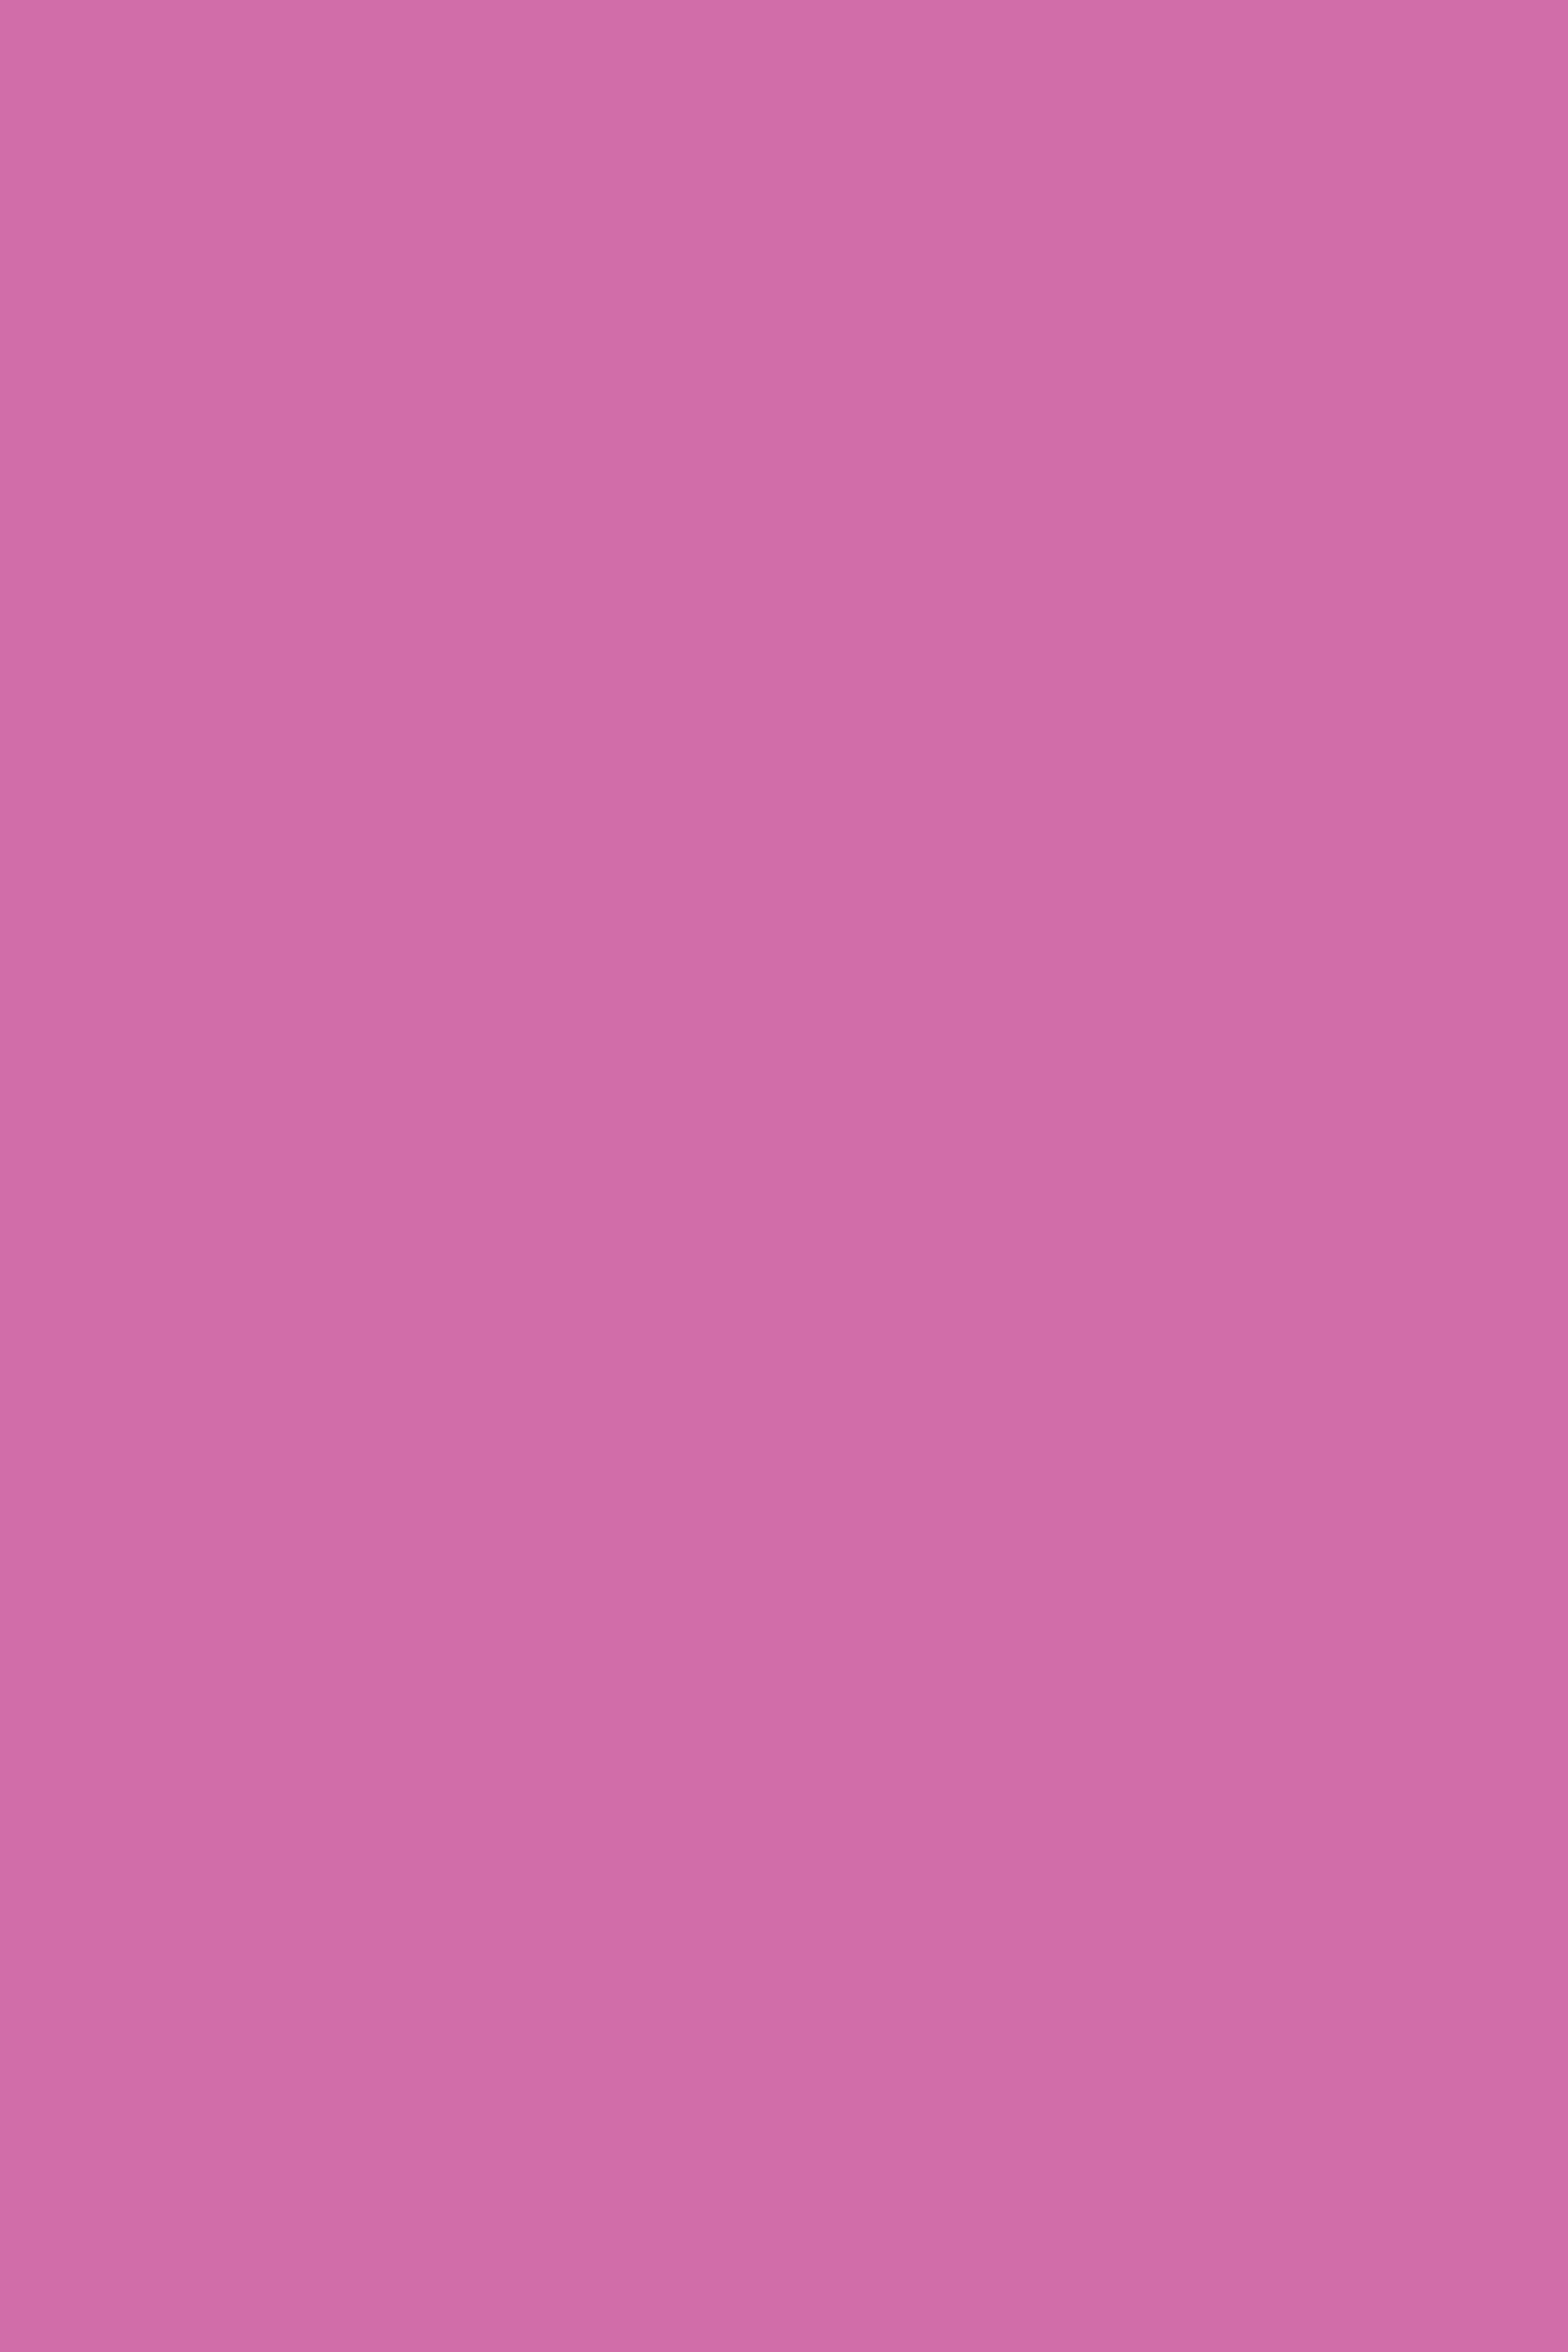 Bastelfilz pink 20 x 30cm 150 g/m² 